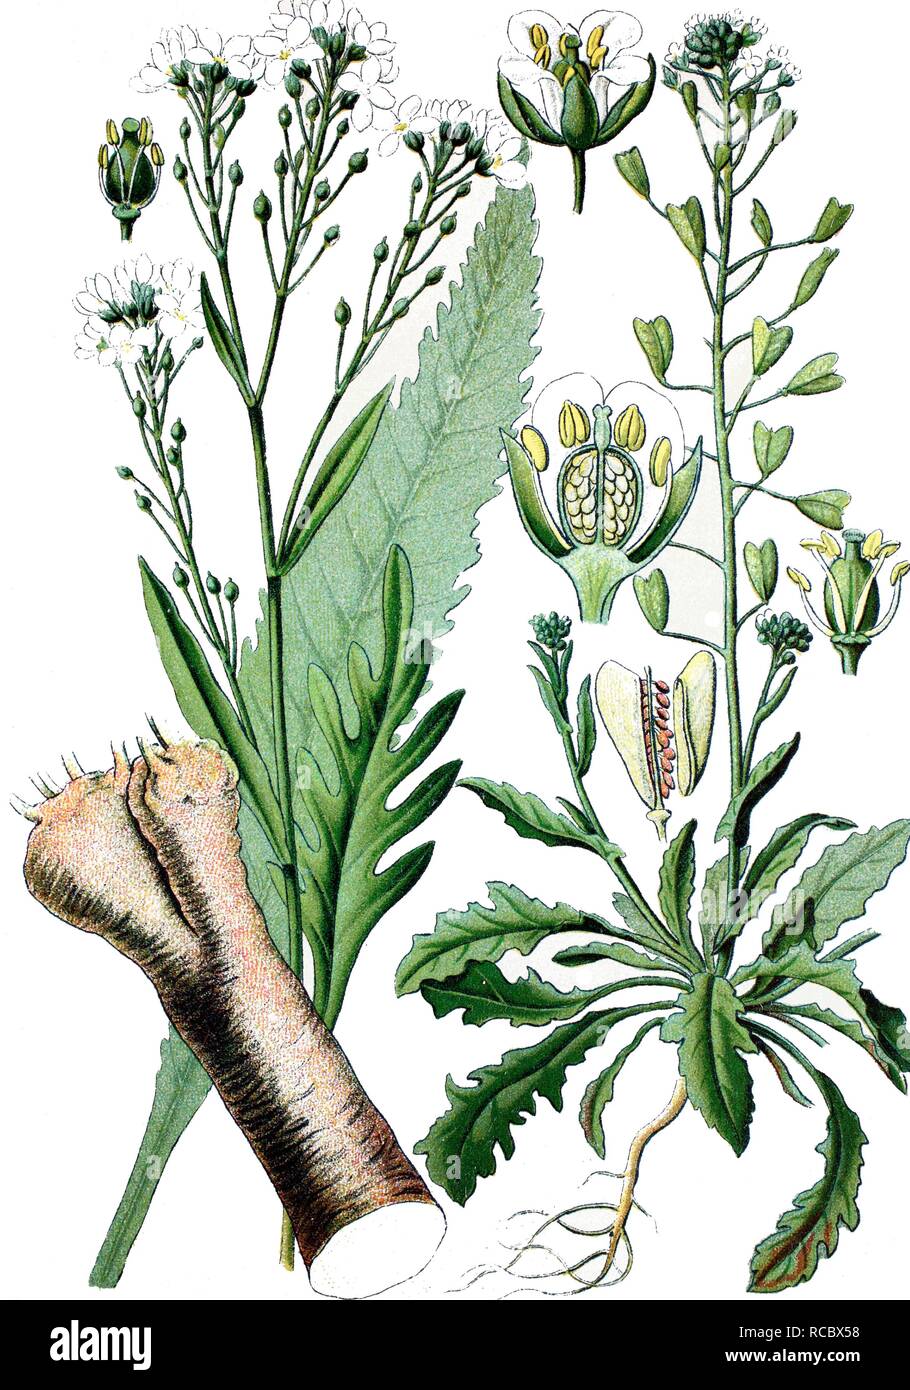 Horseradish (Cochlearia armoracia) on the left, shepherd's purse (Capsella bursa pastoris) on the right, medicinal plants Stock Photo